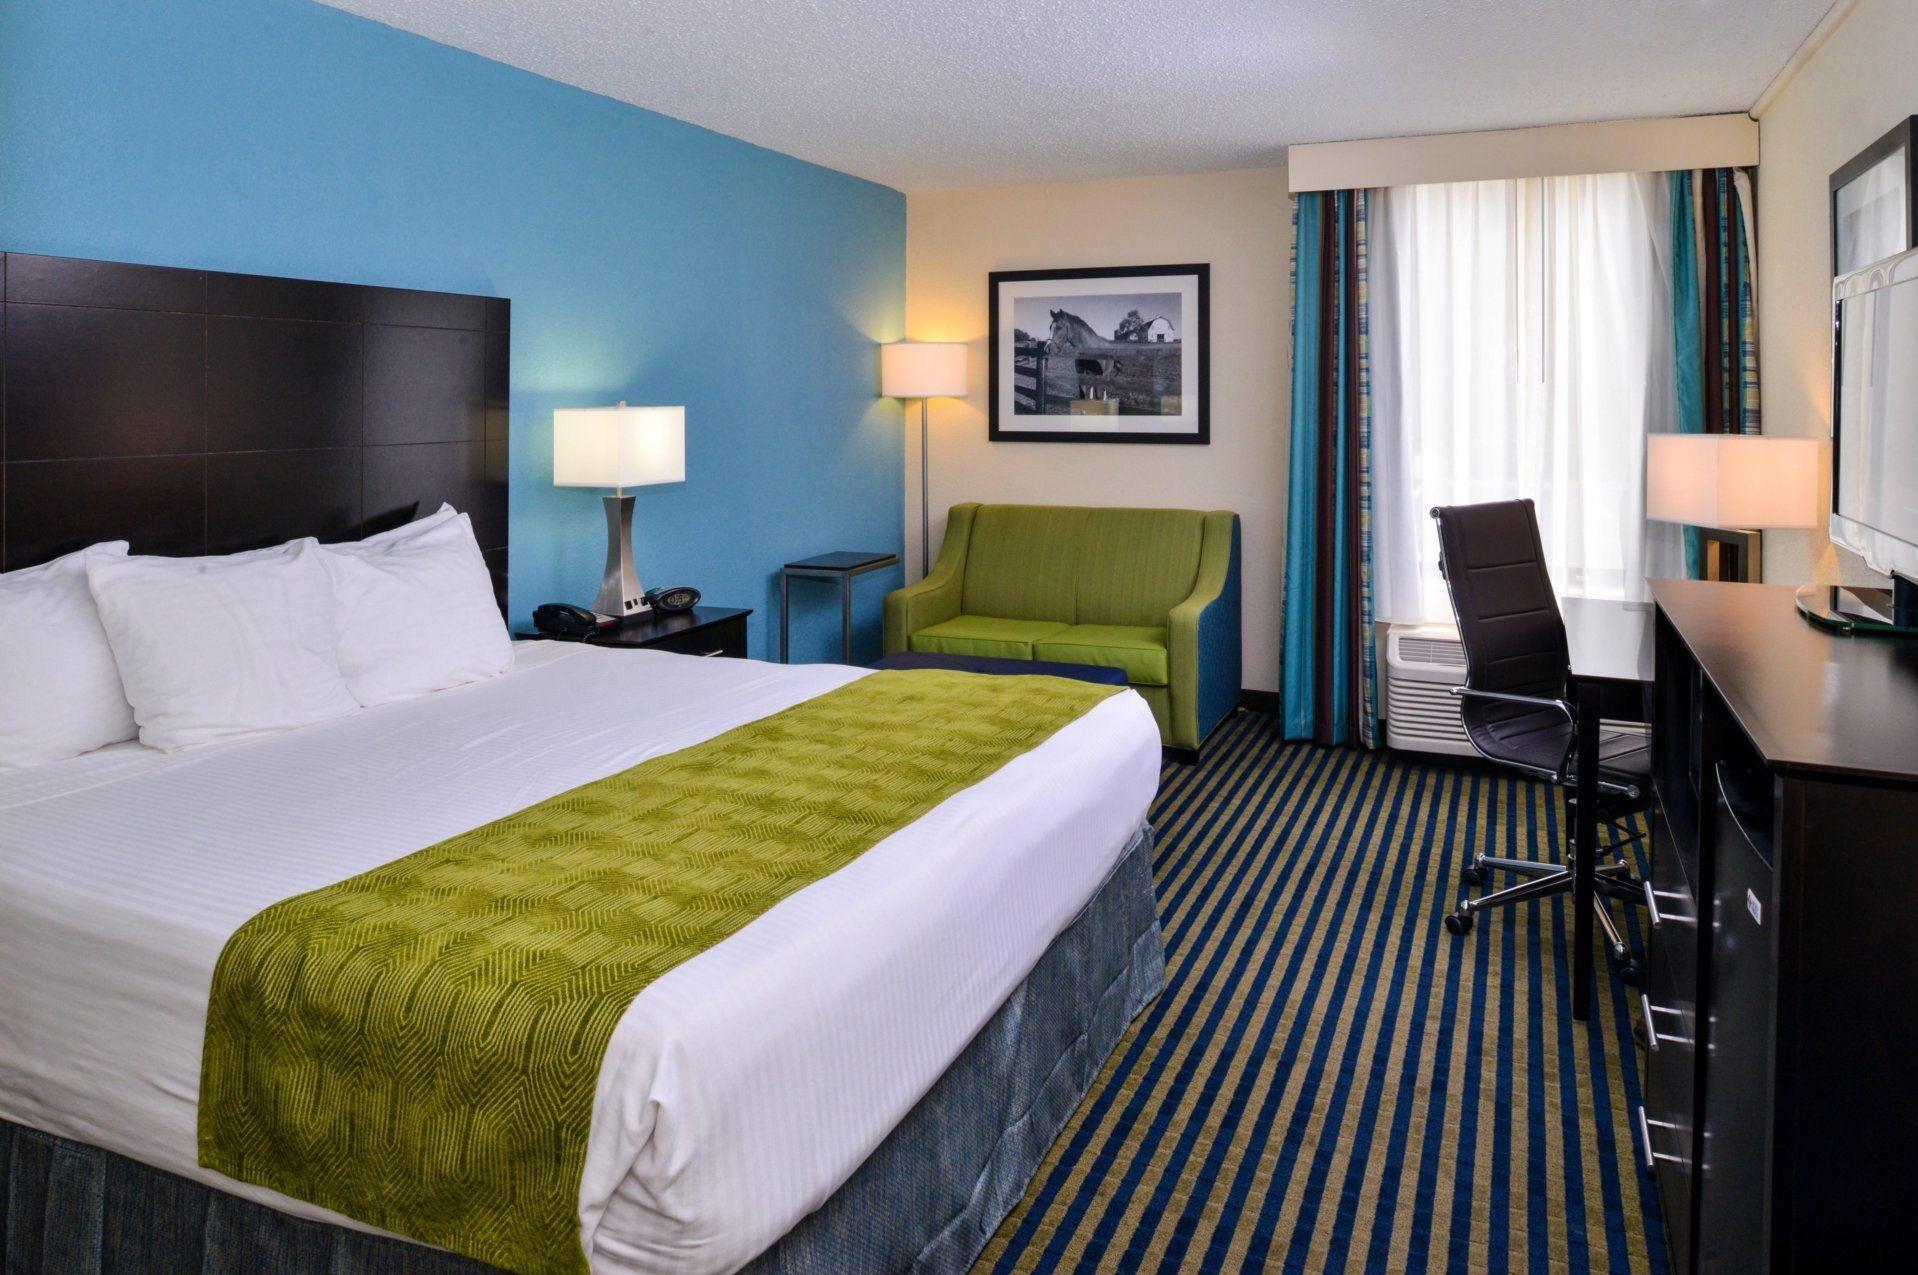 Best Western Leesburg Hotel & Conference Center in Manassas, VA